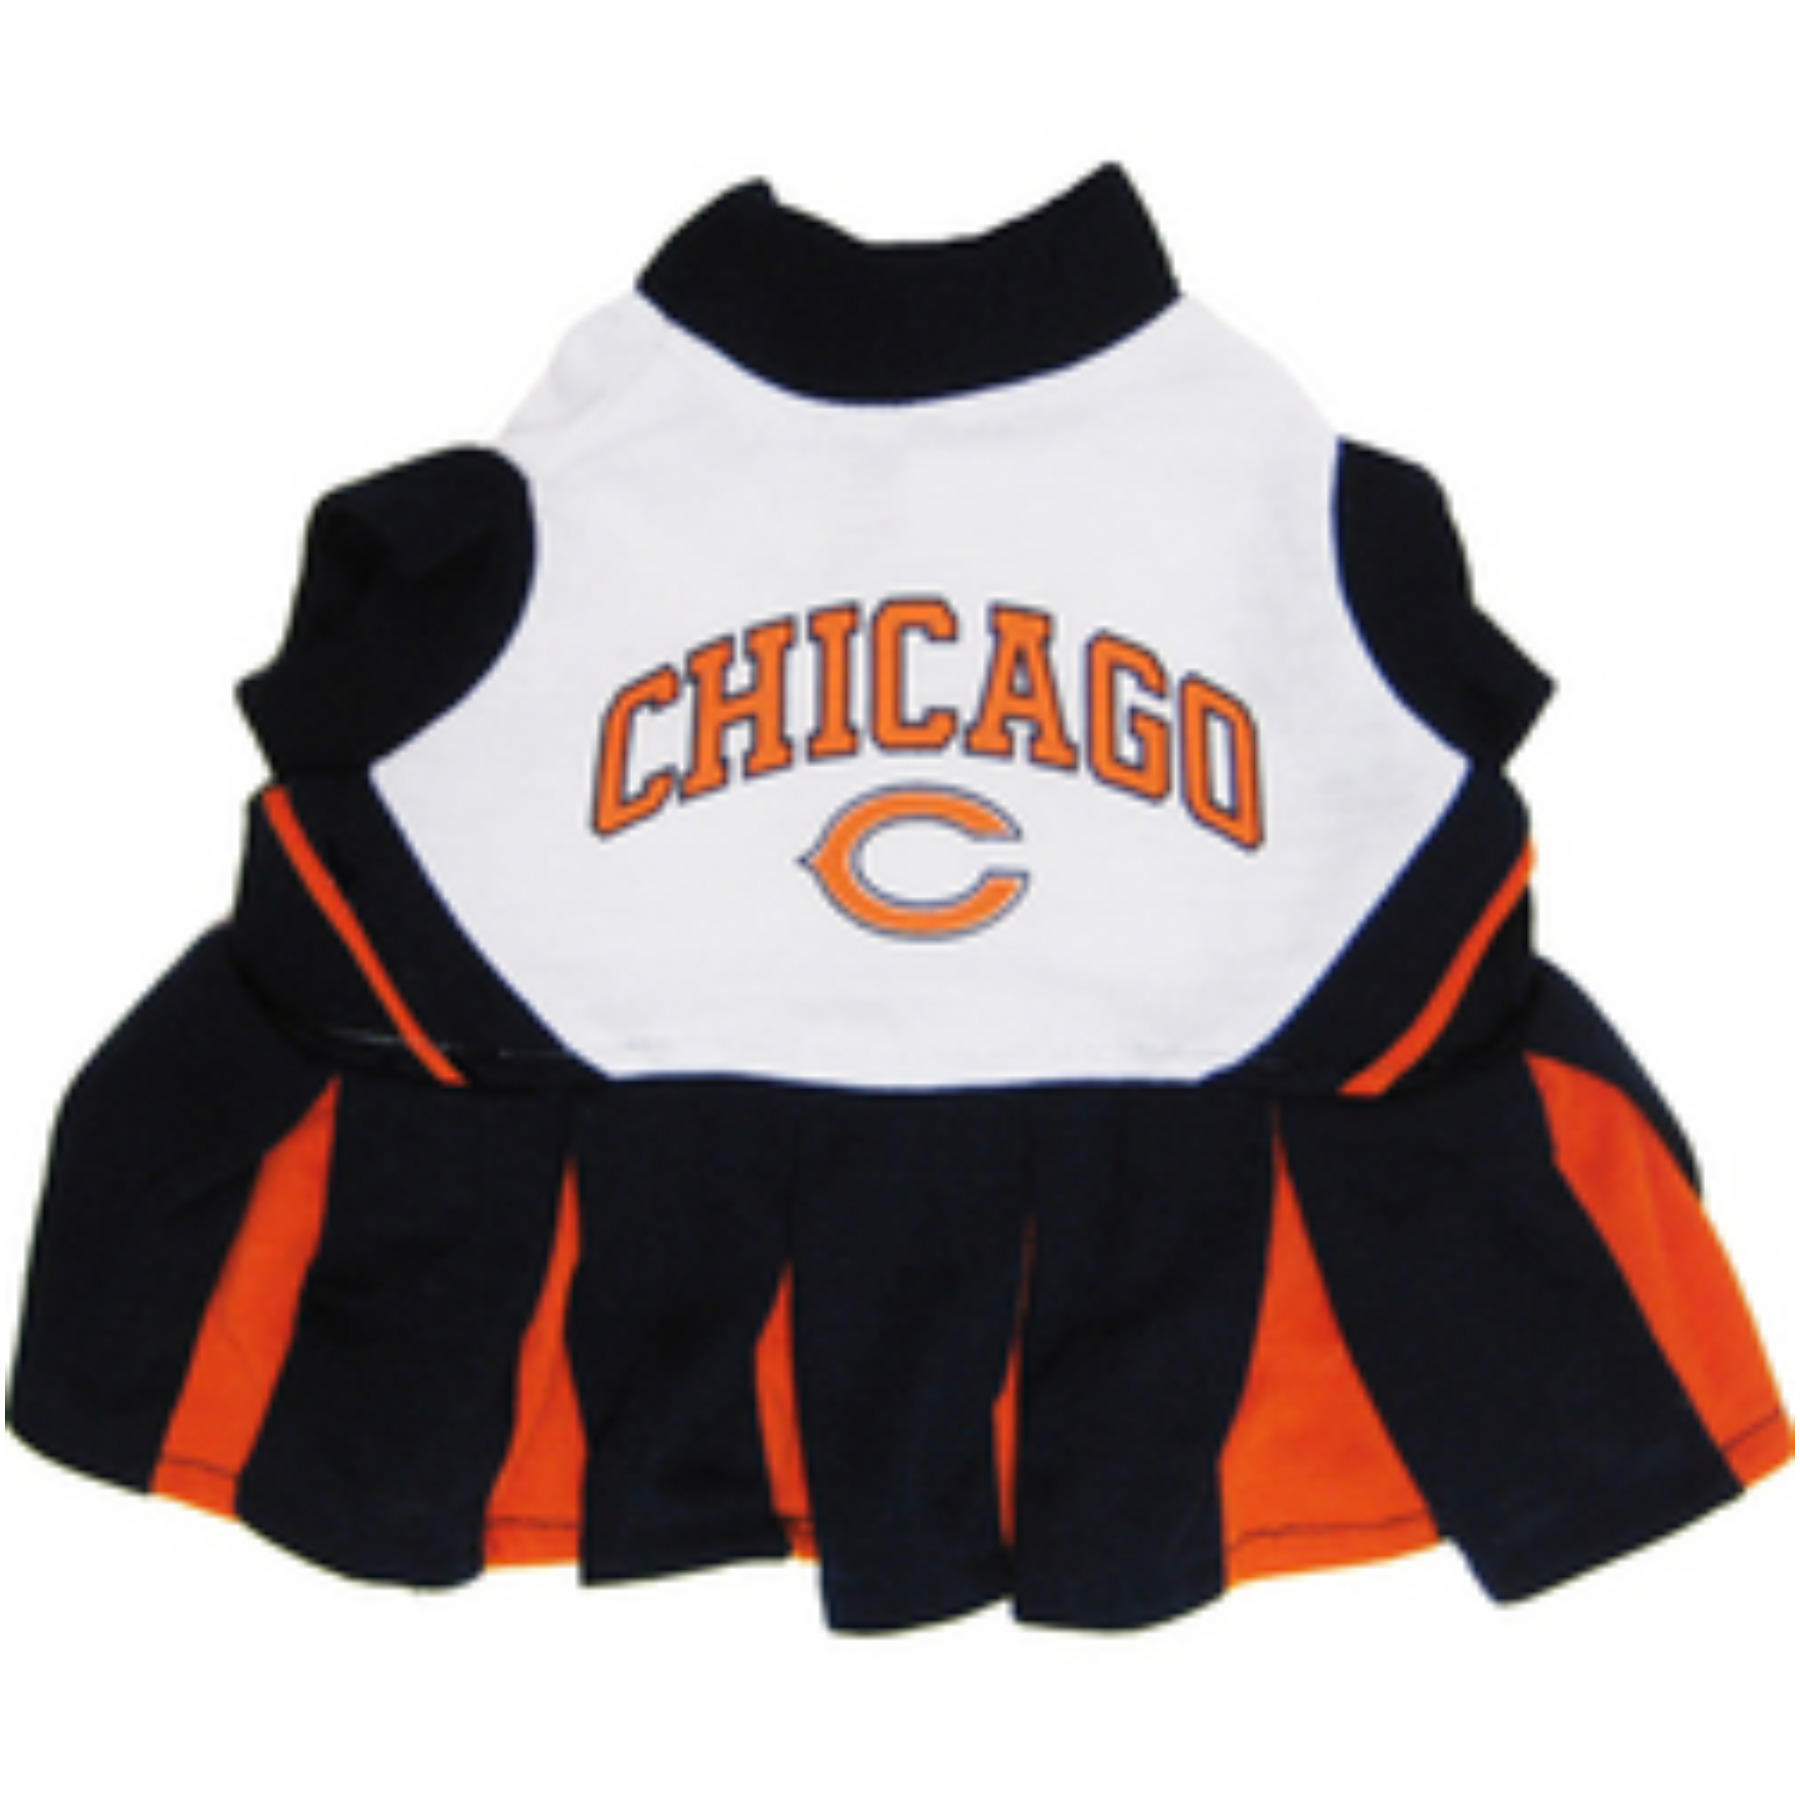 Chicago Bears Cheerleader Dog Dress